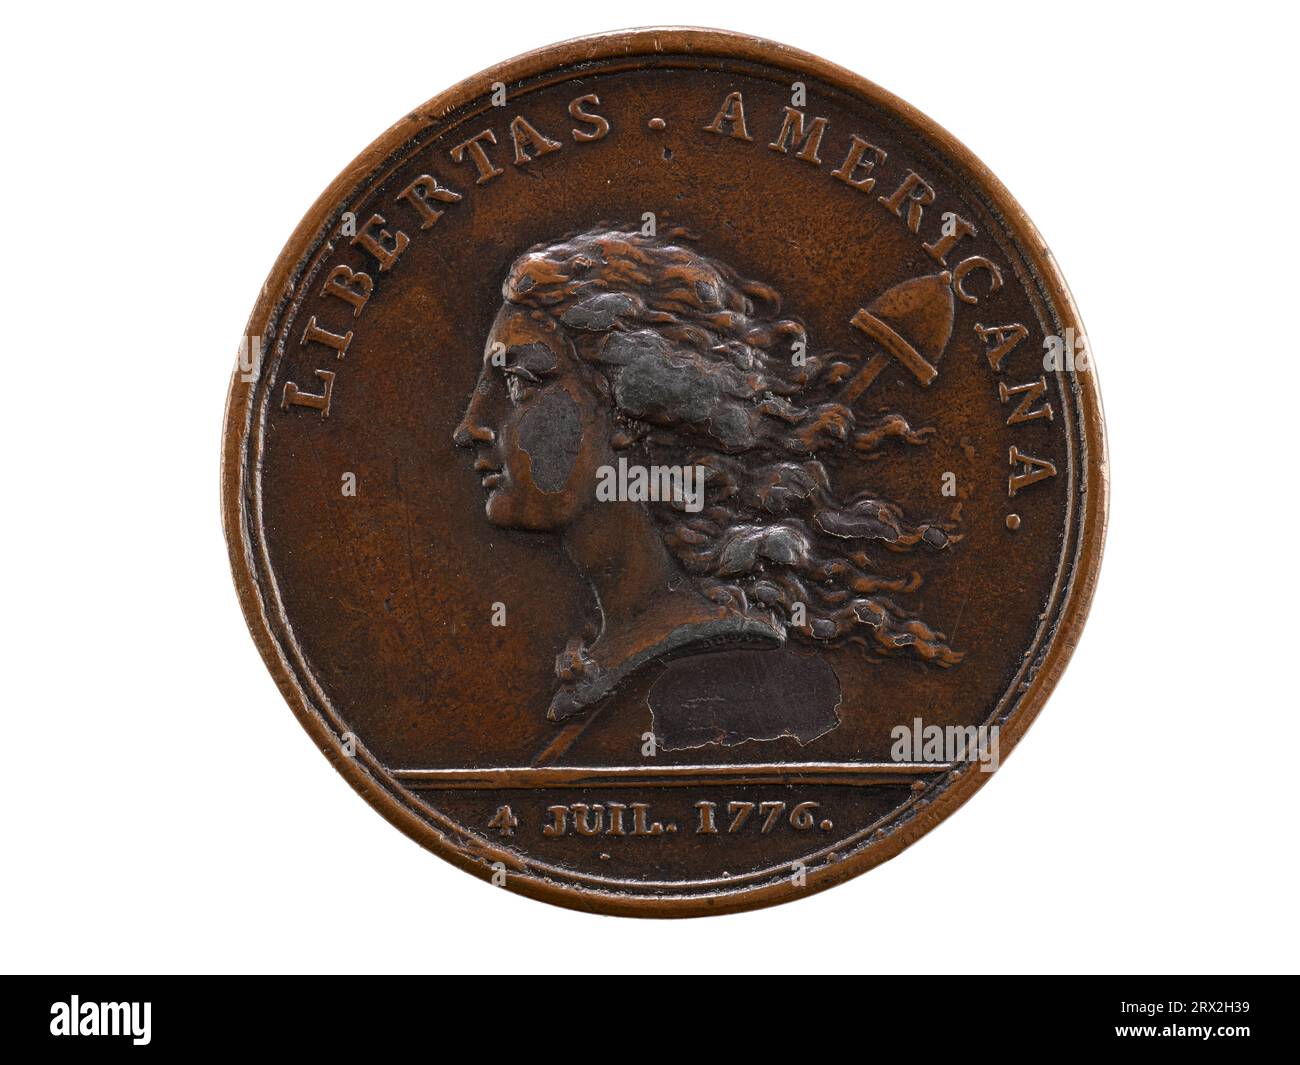 Medal, Libertas Americana, 1782, obverse. NU*245615.0017. Stock Photo